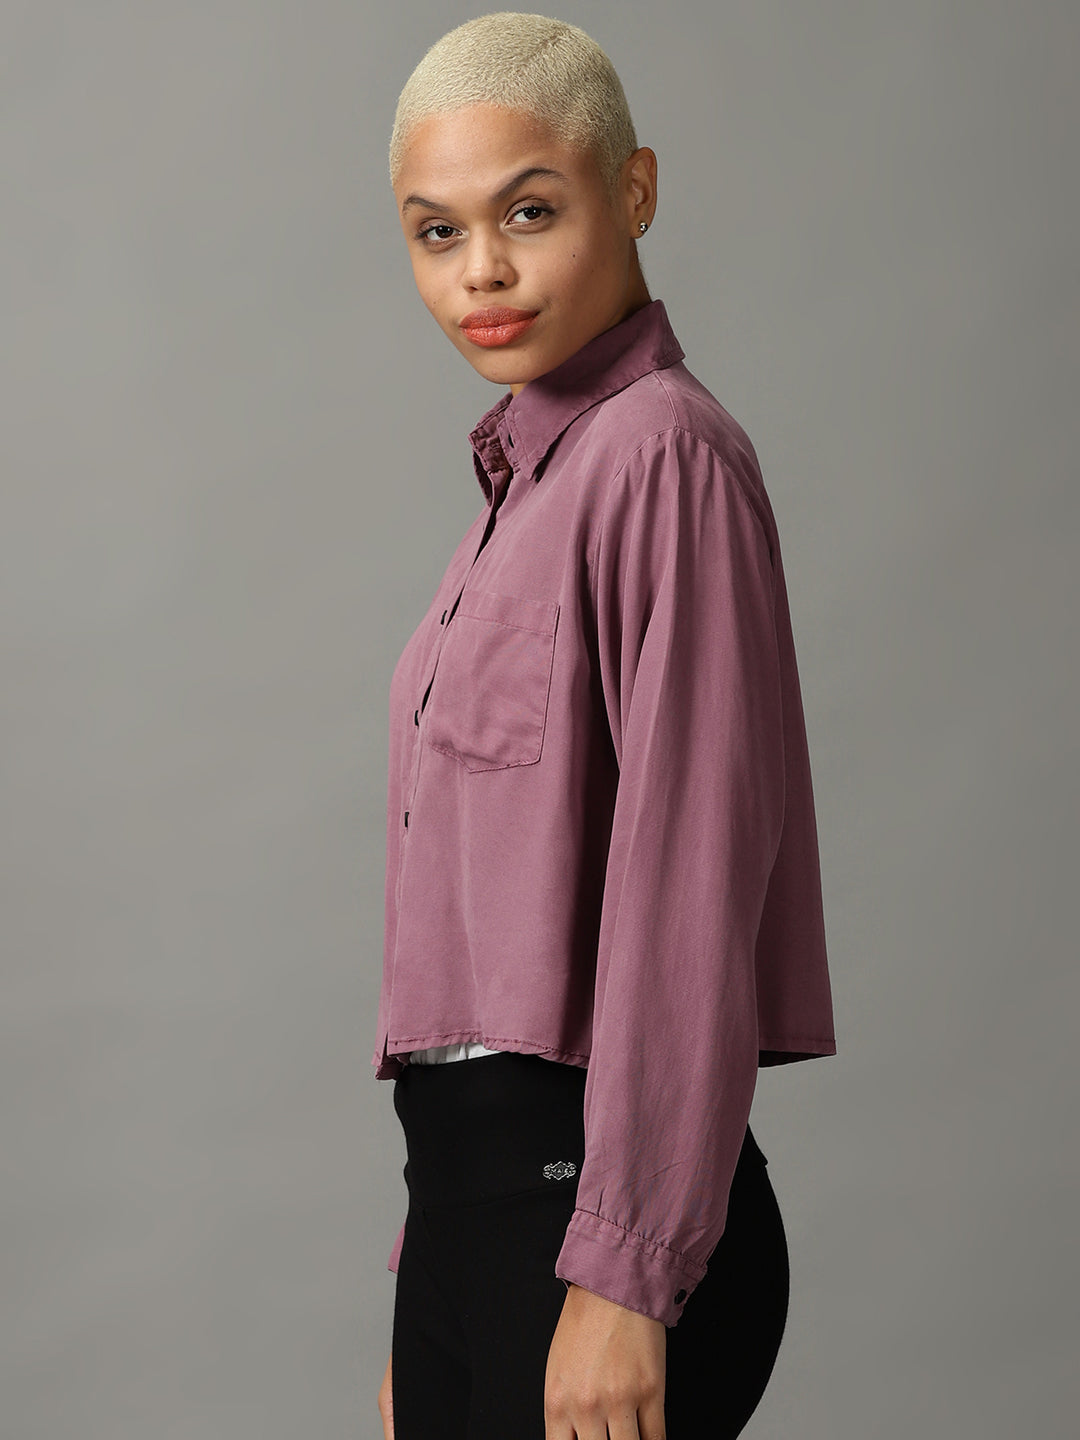 Women's Violet Solid Crop Shirt